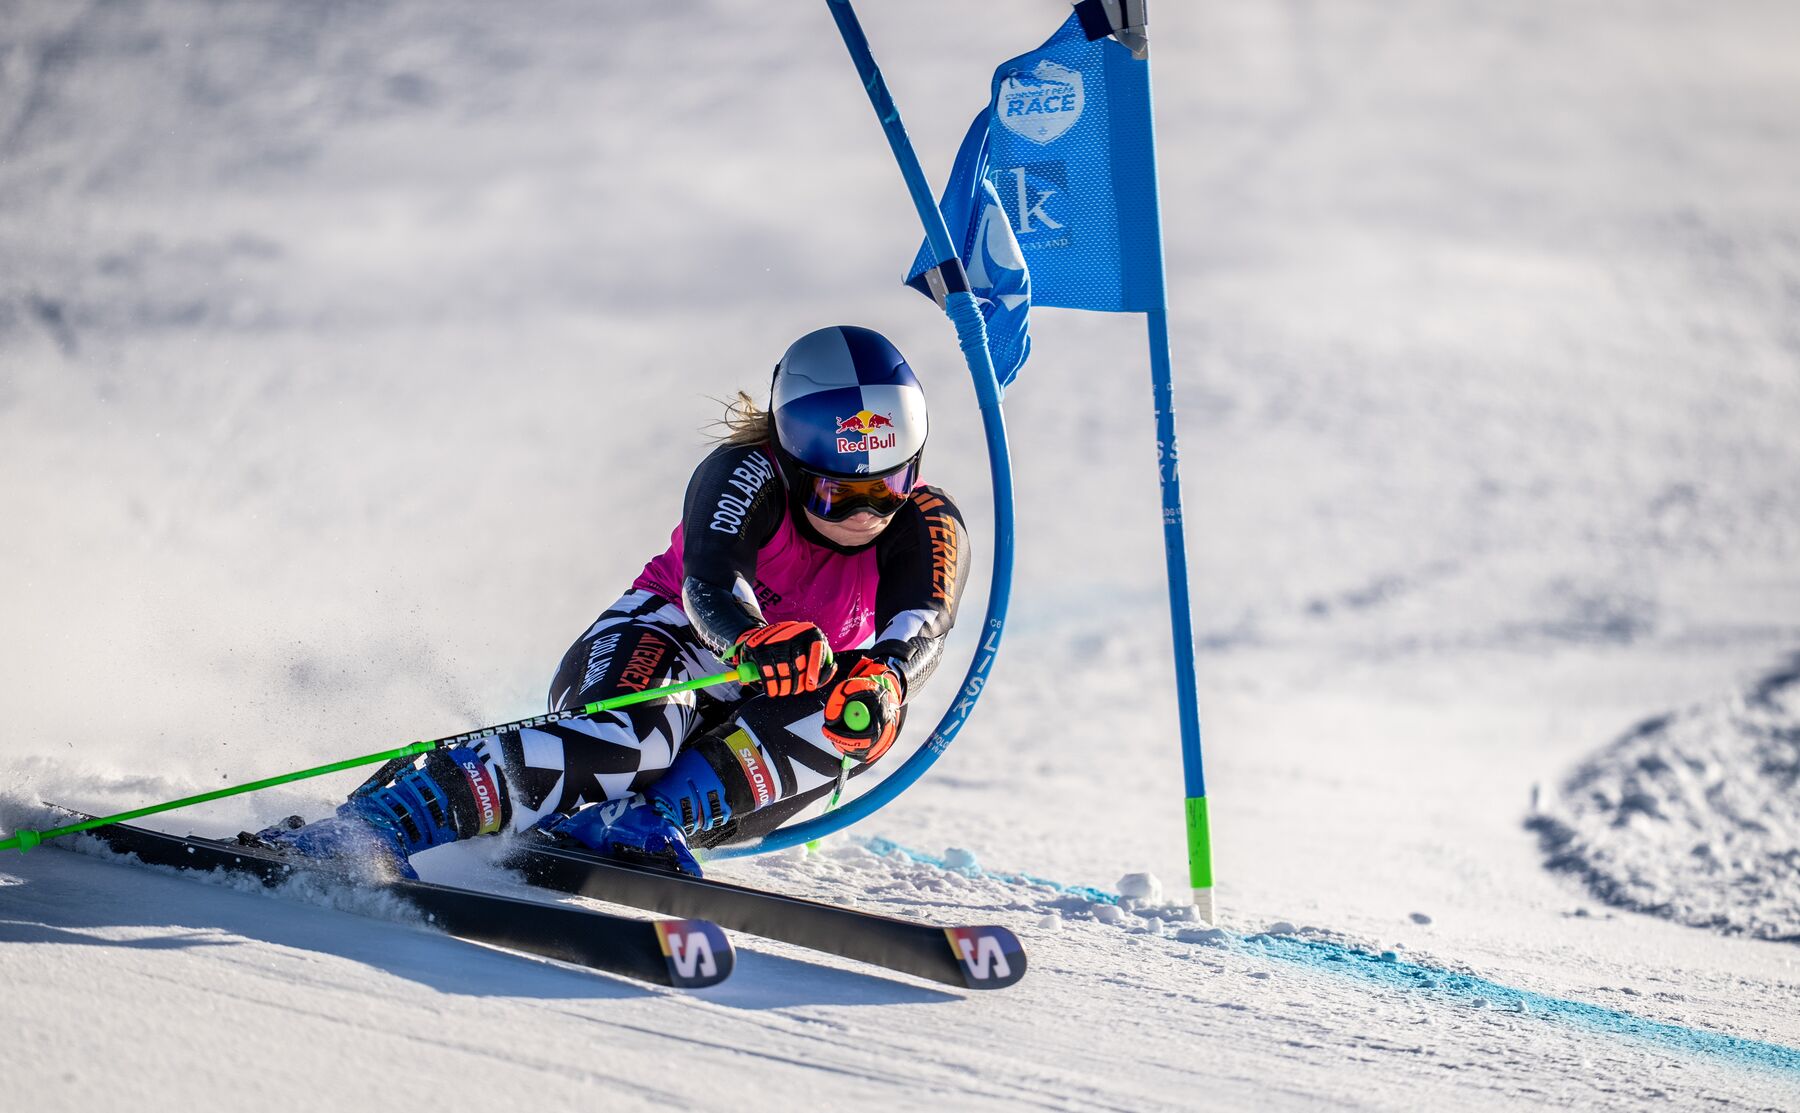 Winter Games kicks off with Slalom